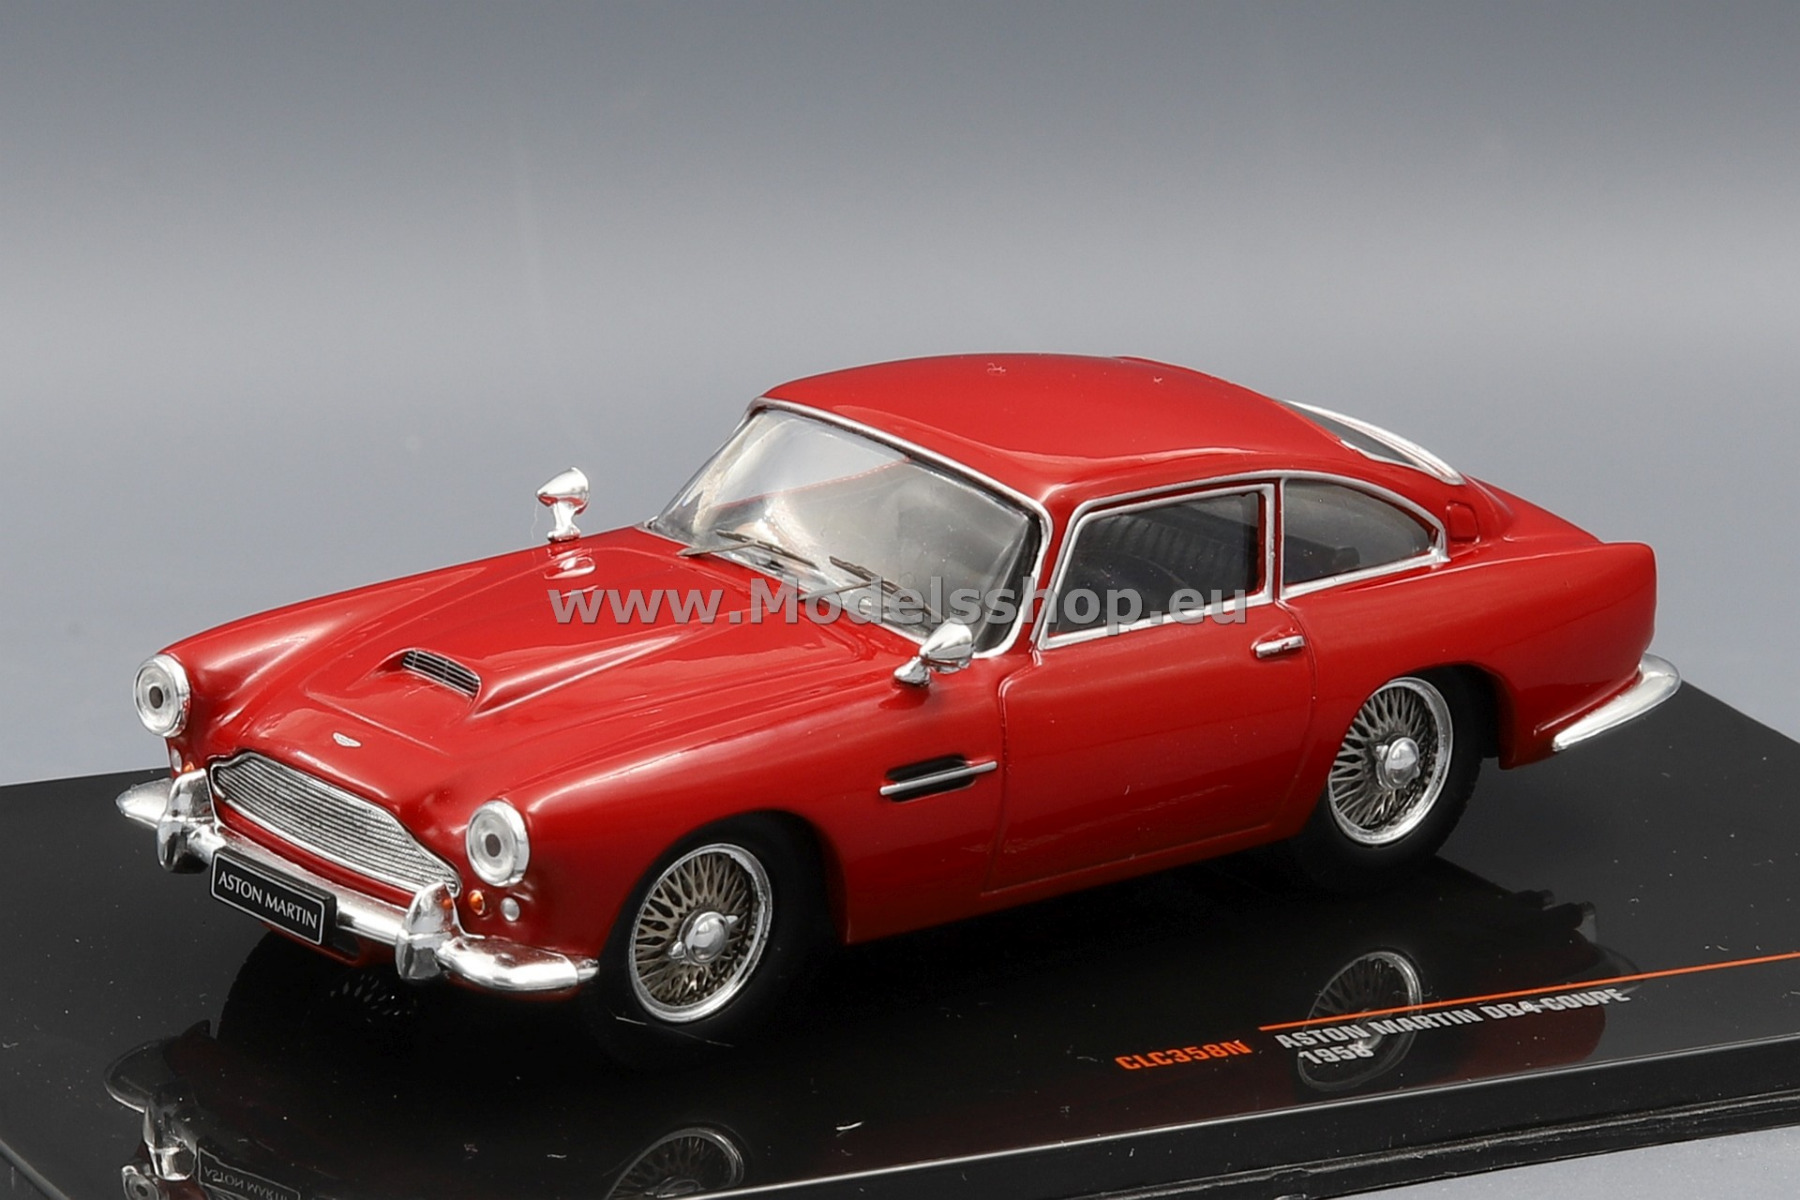 Aston Martin DB4 Coupe, RHD, 1958 /red/